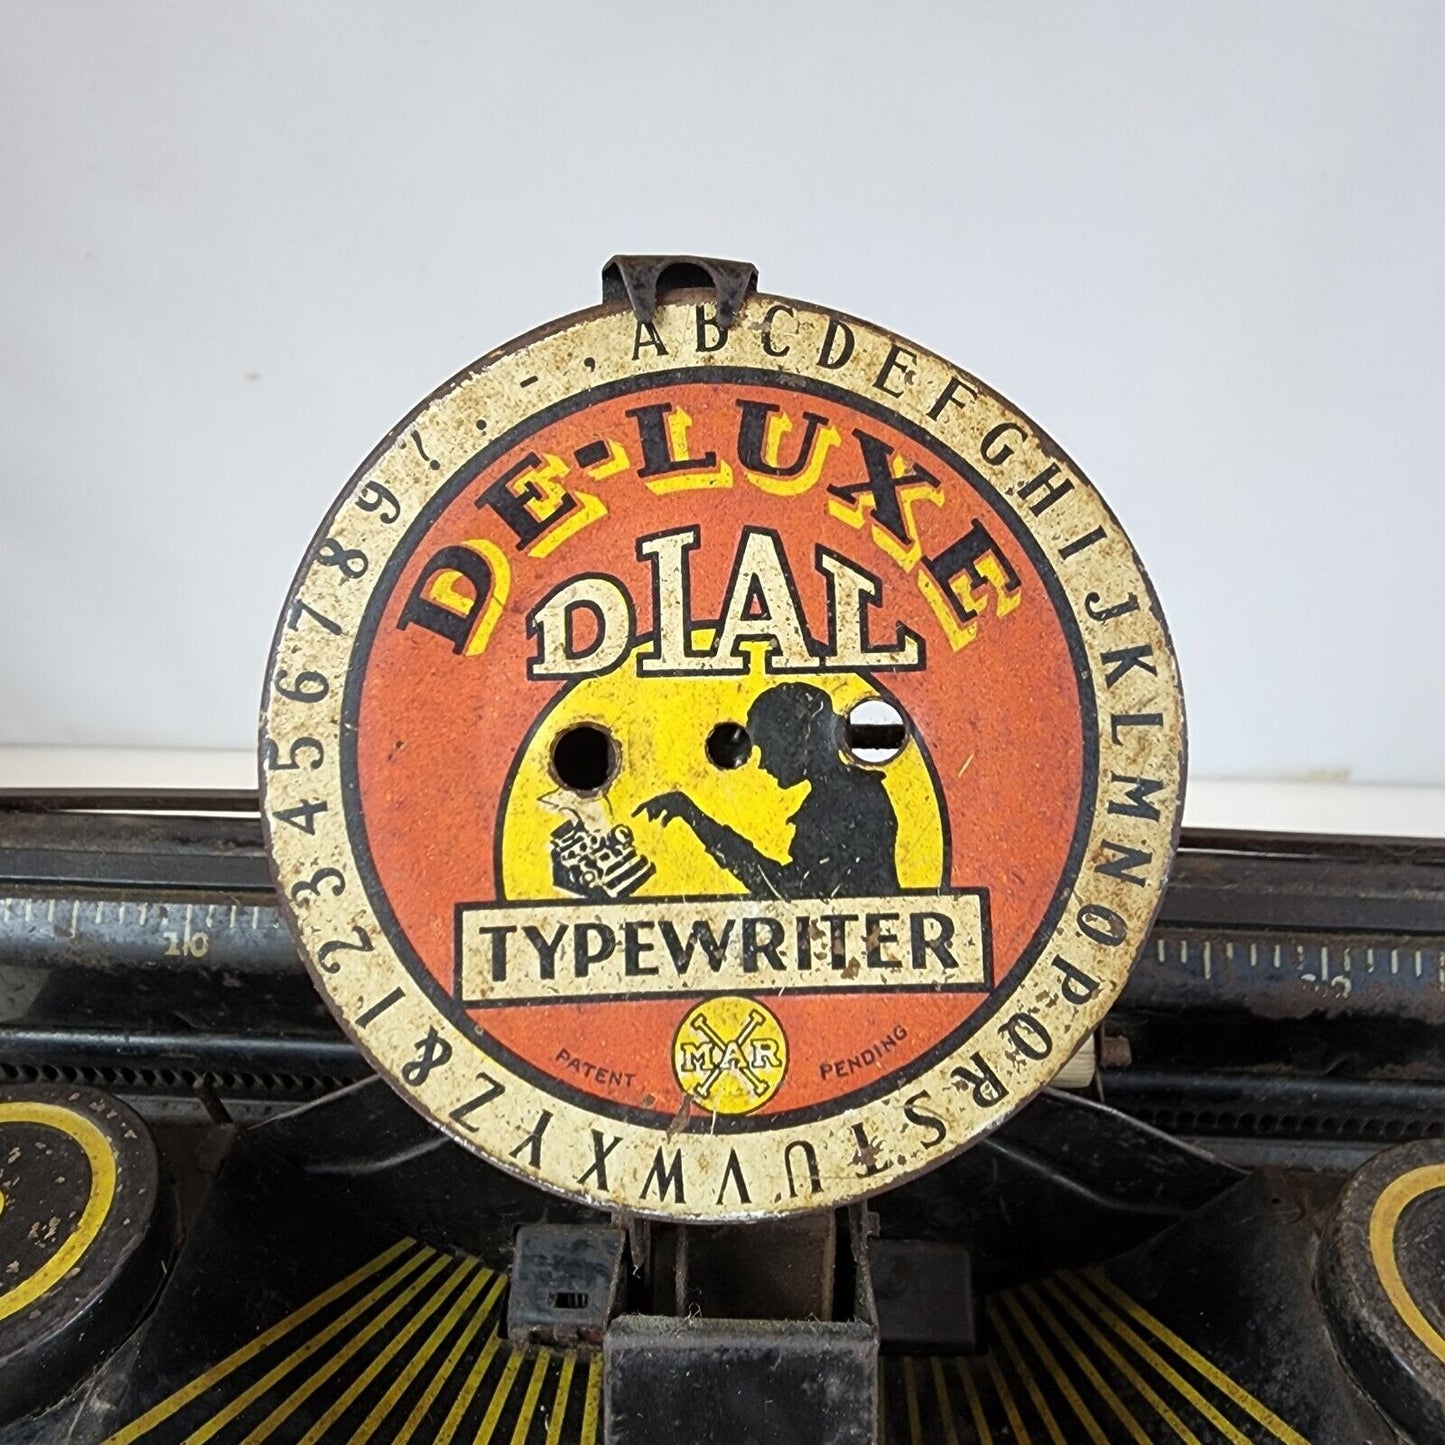 1950's Marx De-Luxe Dial Typewriter Litho Tin Toy Pressed Steel Keys